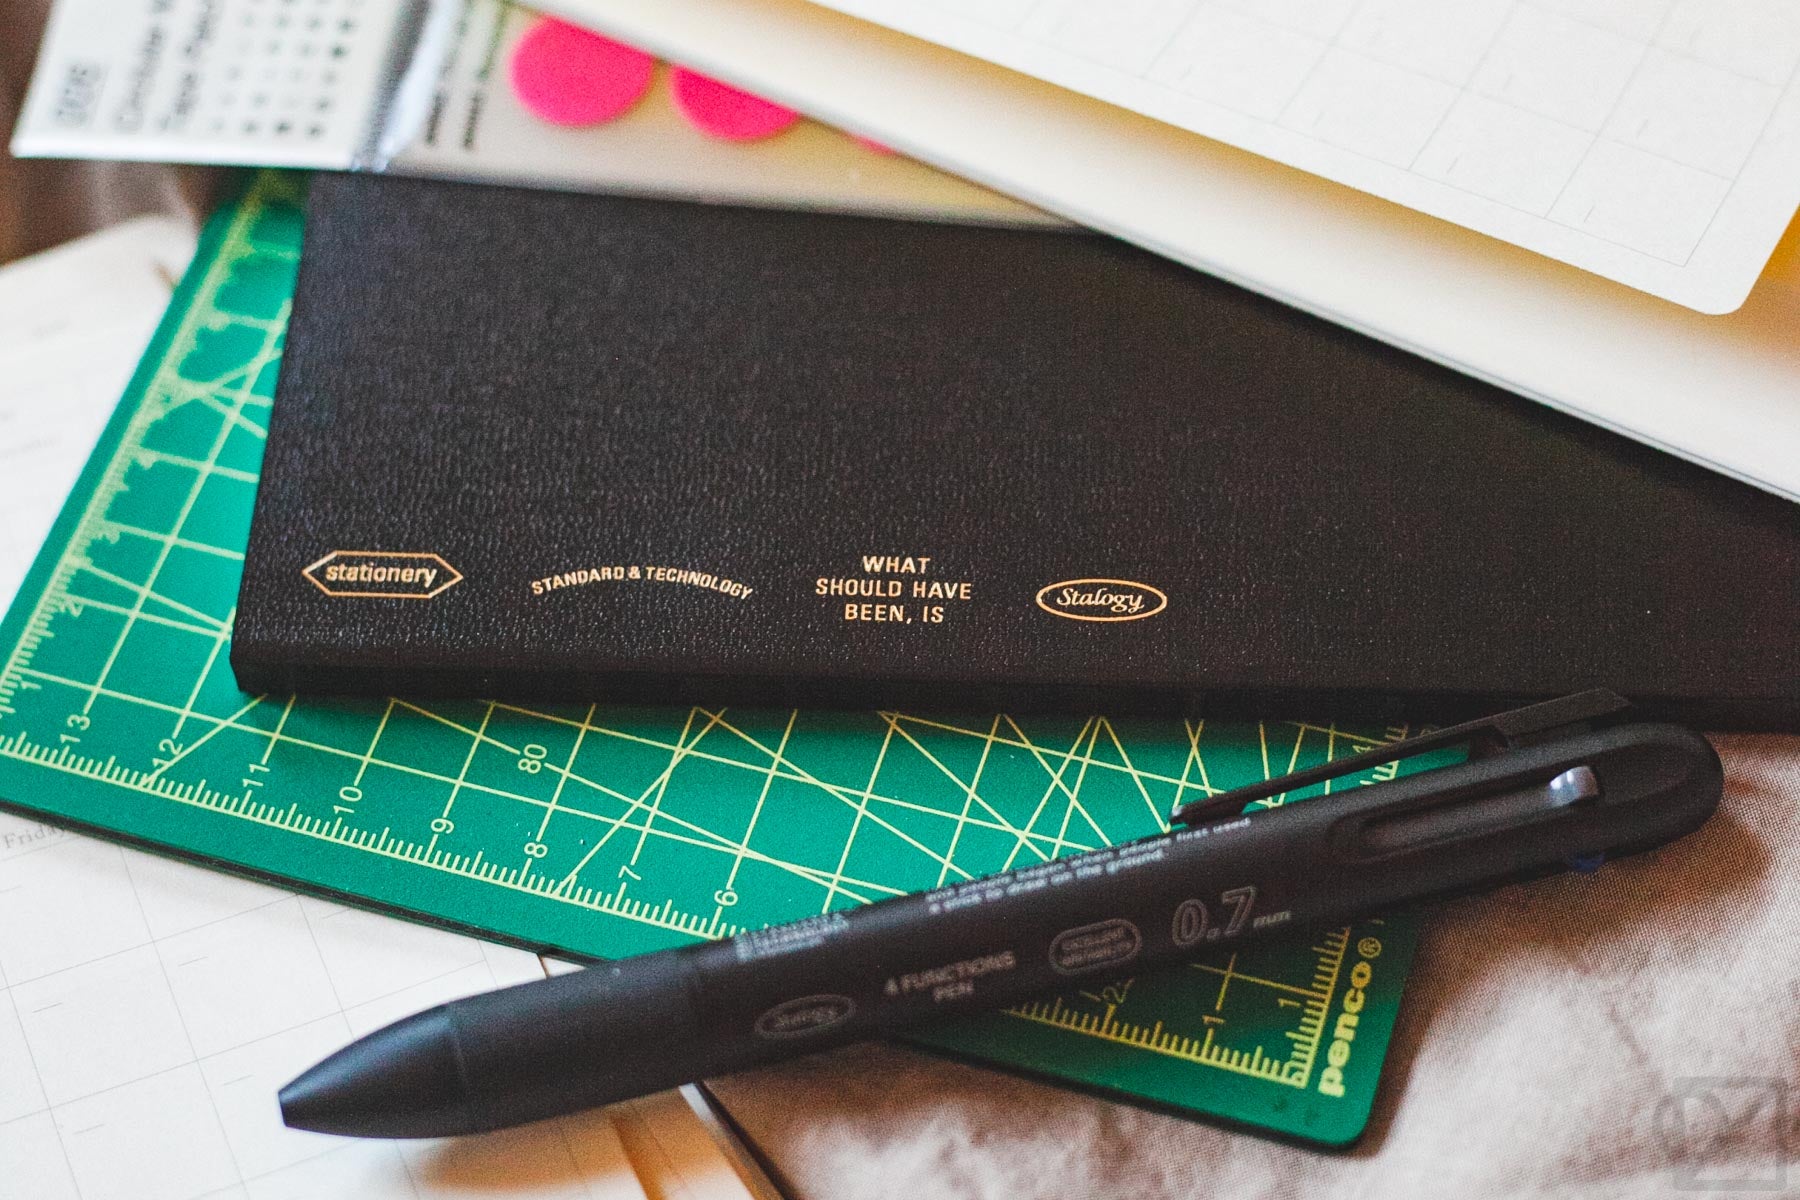 the editor notebook has crisp logos we love